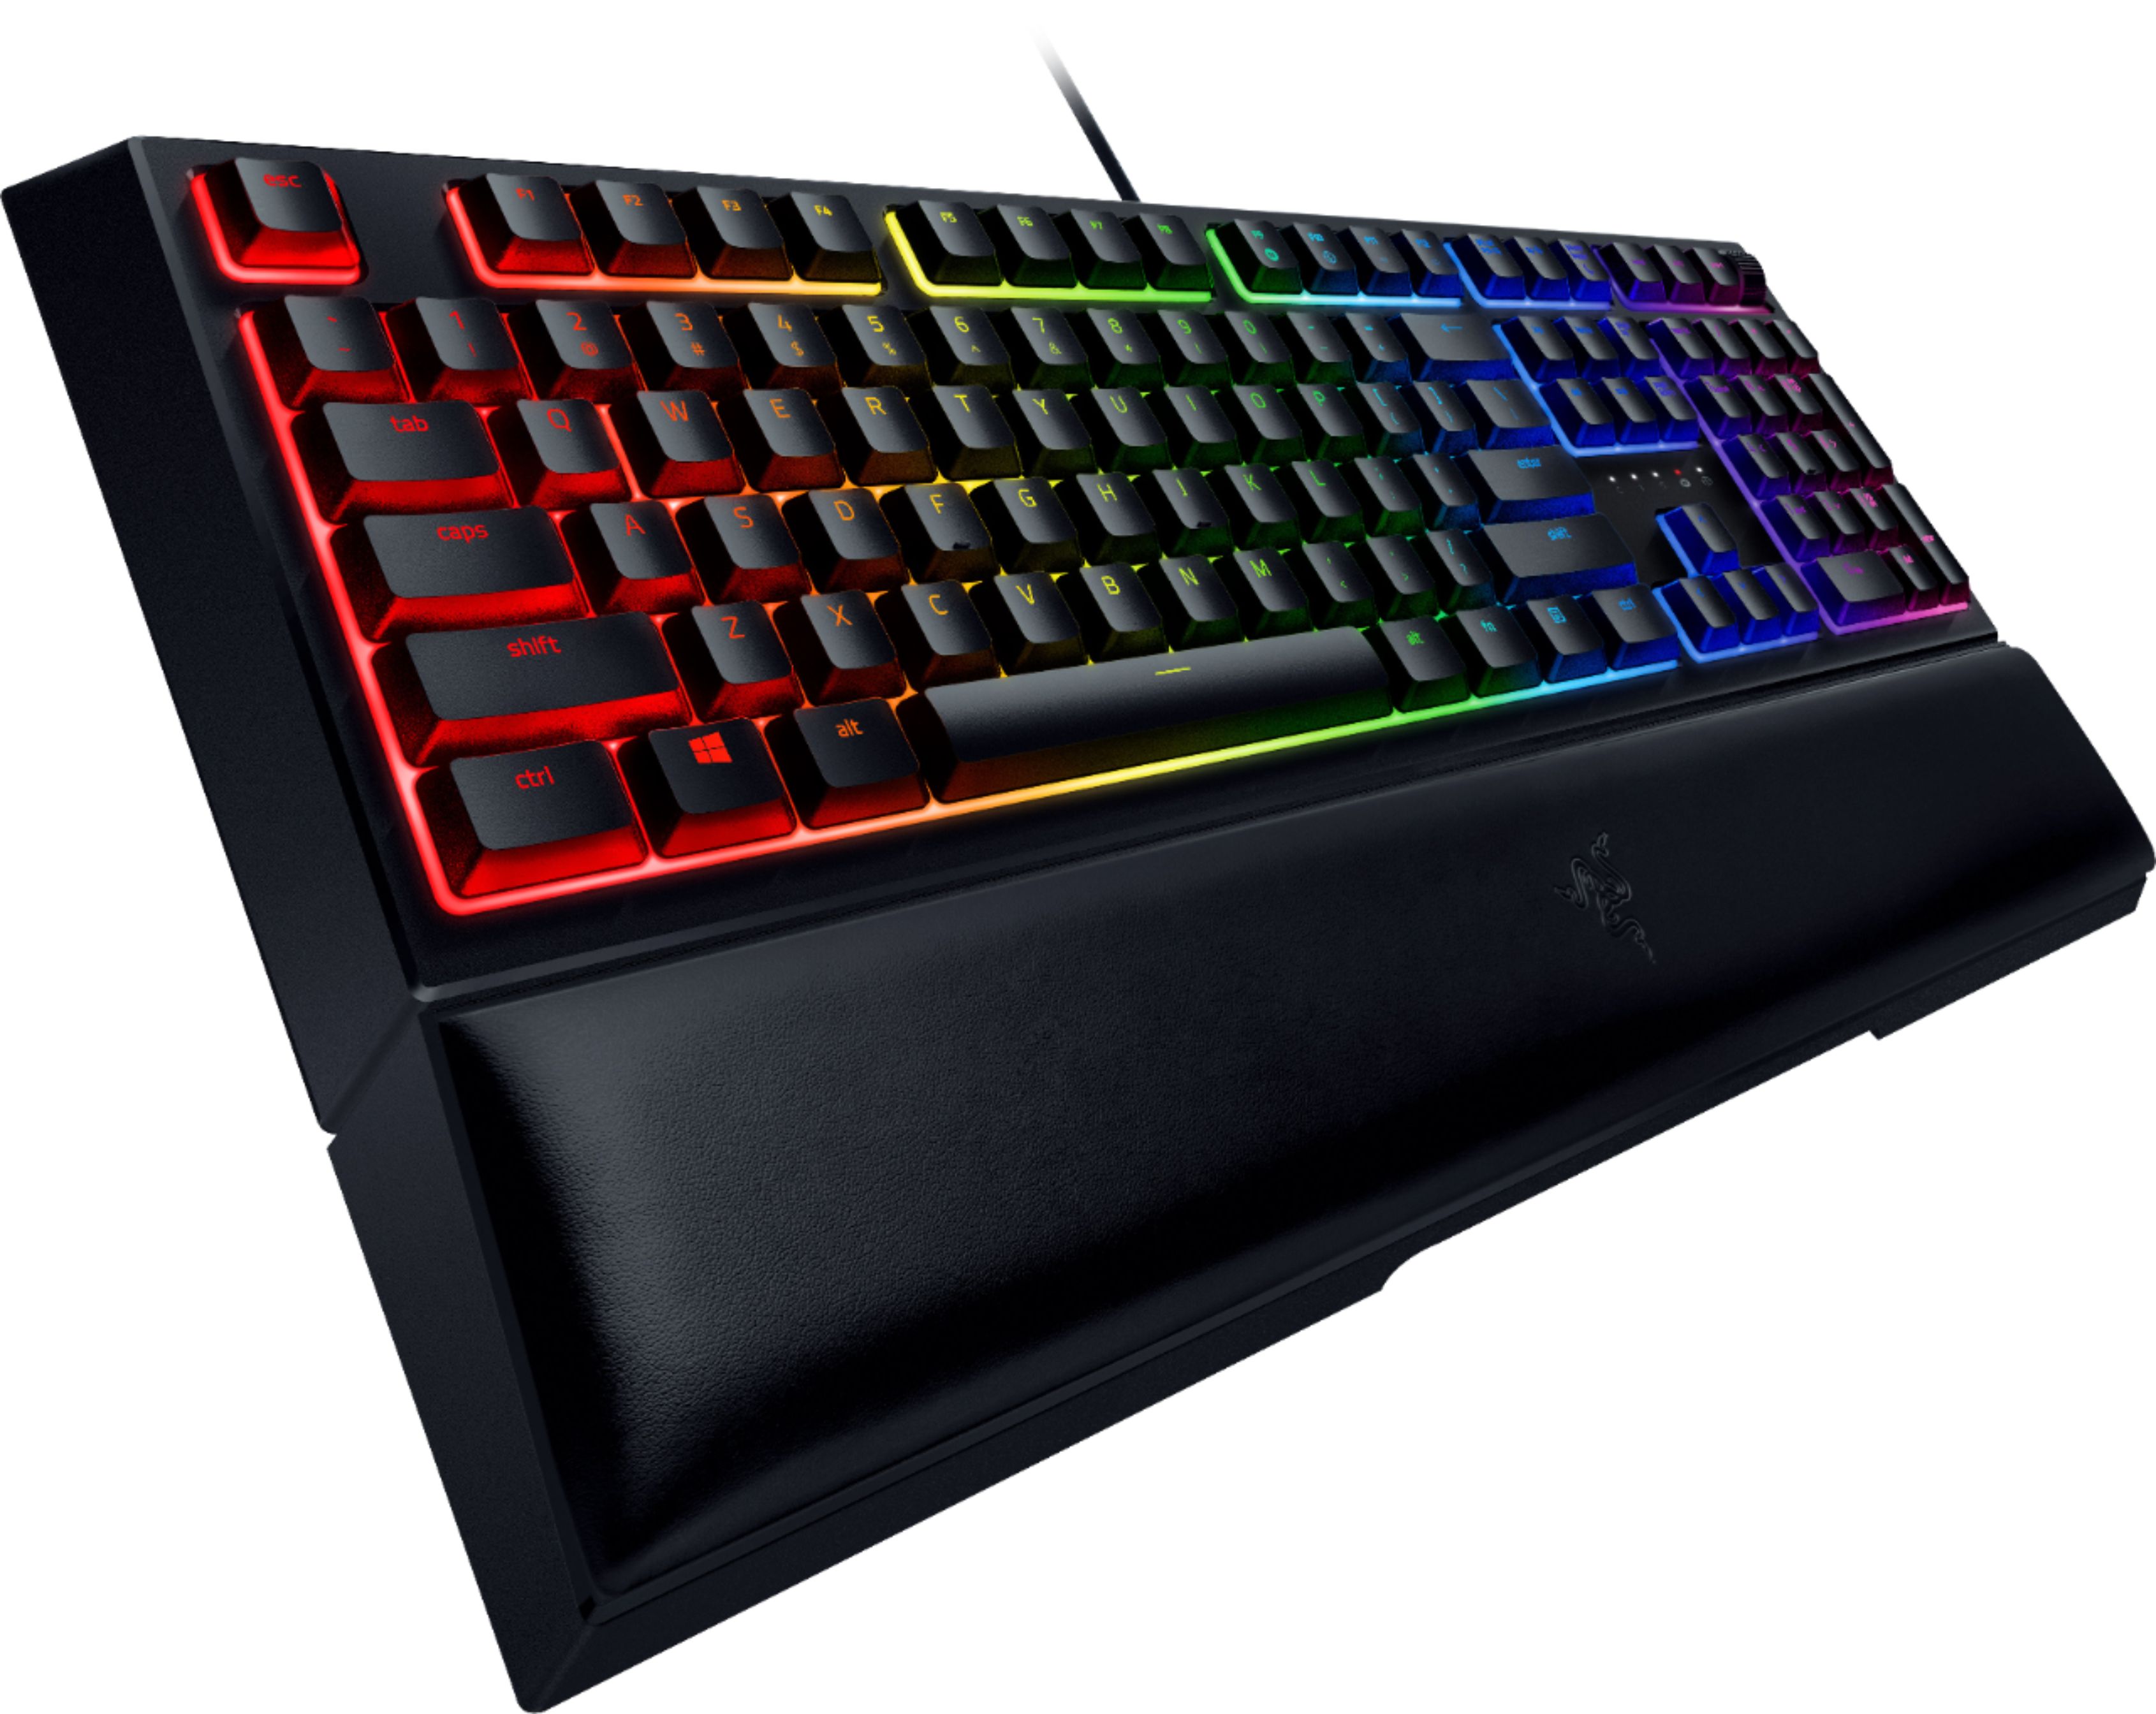 Angle View: Razer - Huntsman Mini 60% Wired Optical Linear Switch Gaming Keyboard with Chroma RGB Backlighting - Black